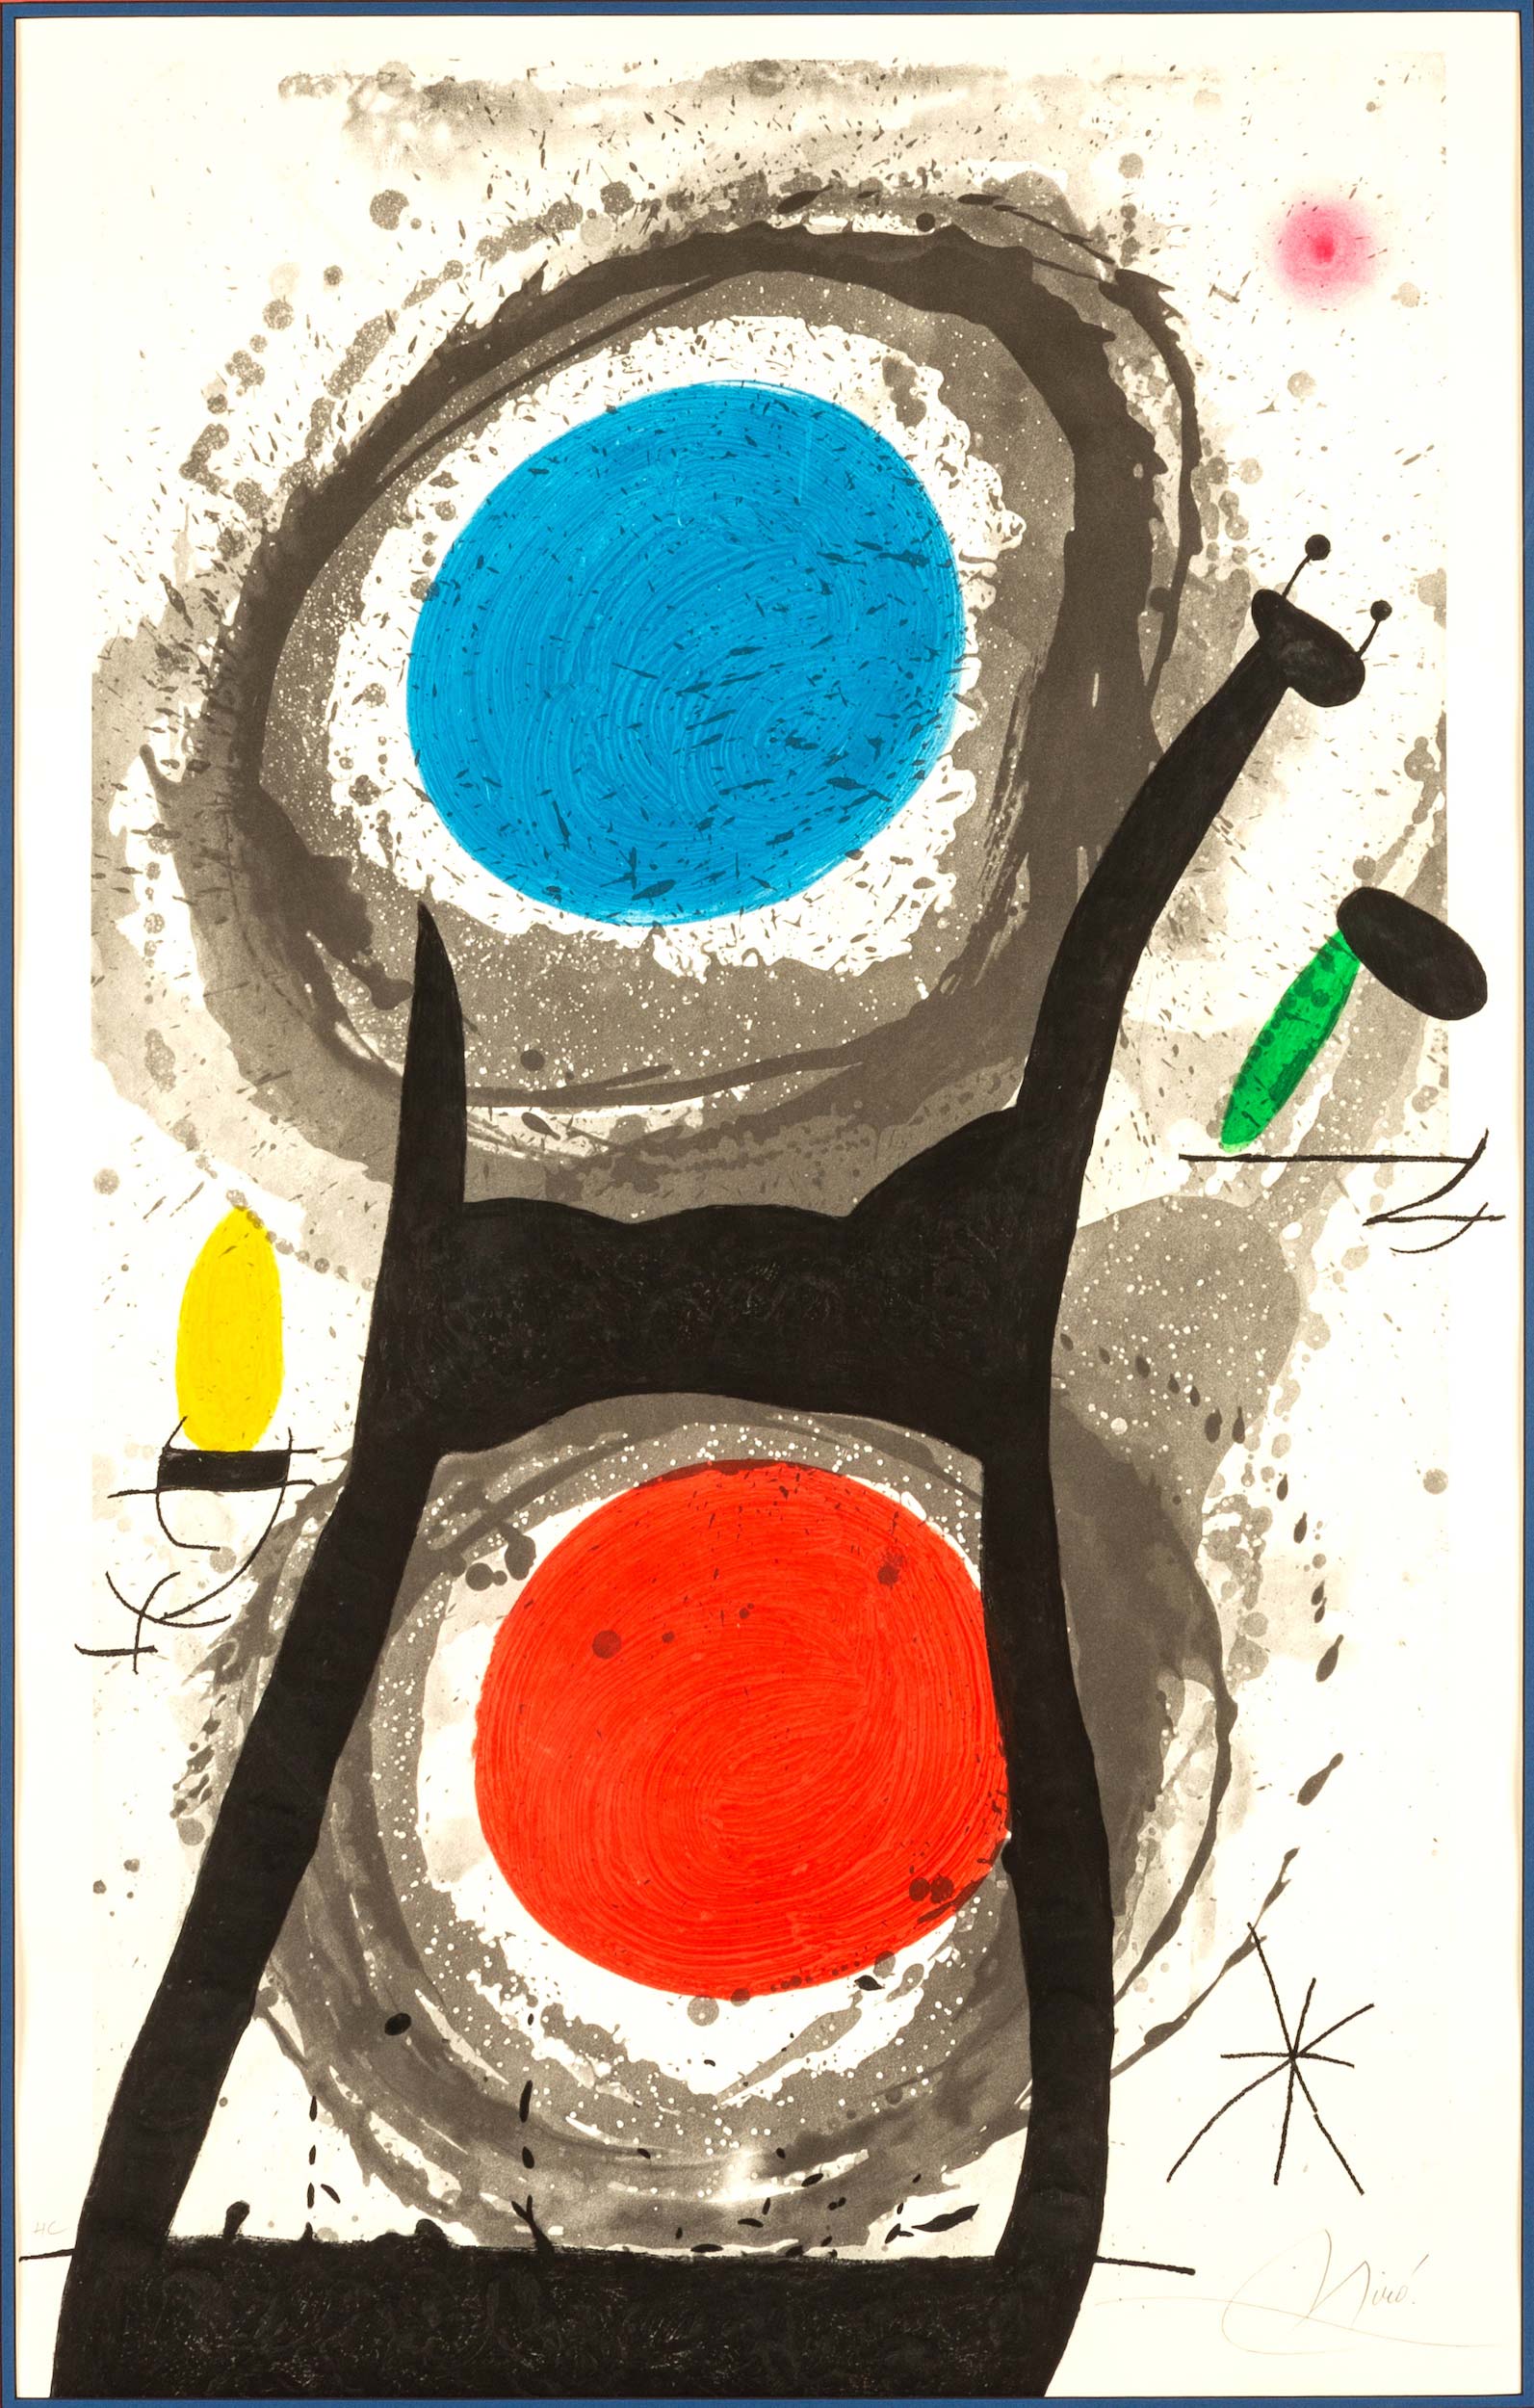 Joan Miró (Spanish, 1893-1983) "L'Adorateur du soleil' (Sun Worshipper), $8,000-$12,000